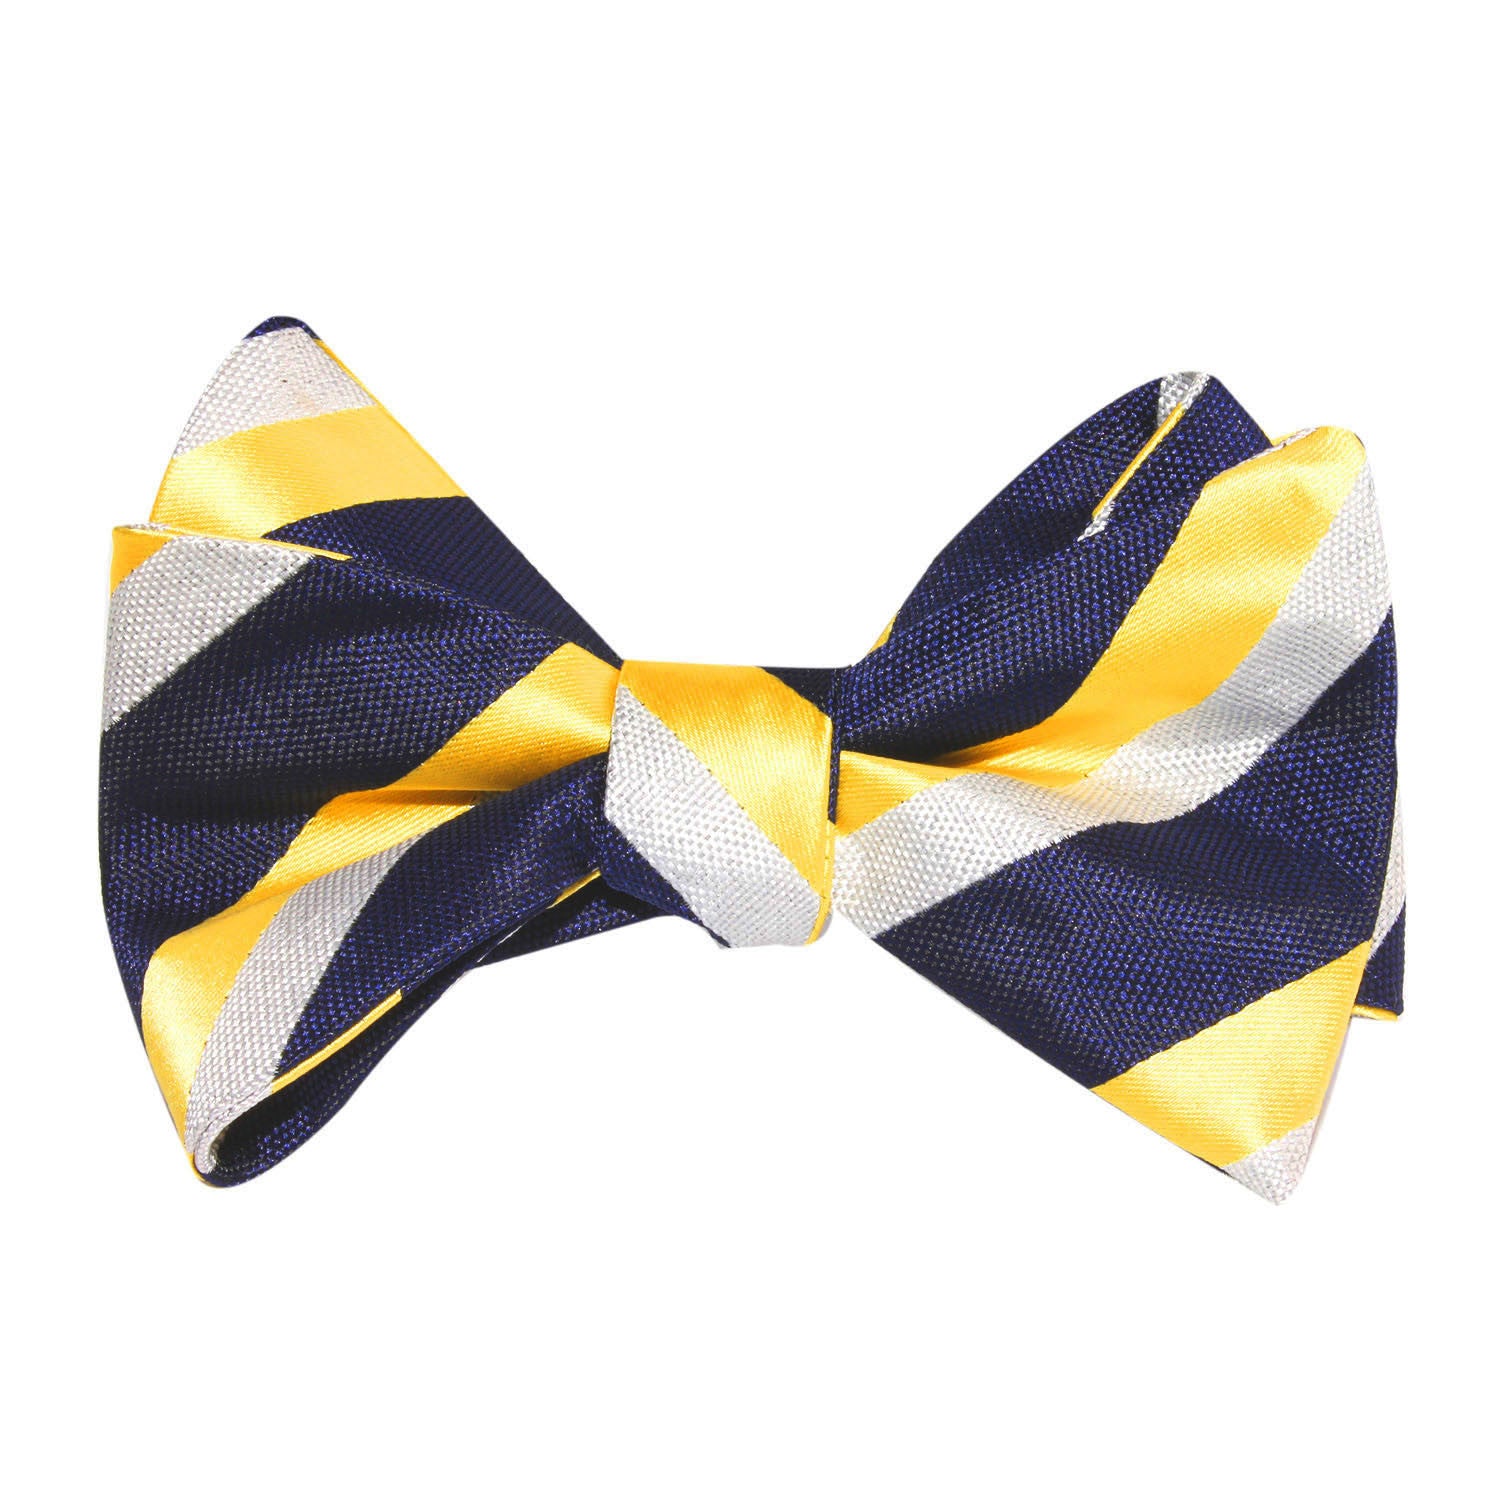 Navy Blue Yellow Stripe Self Tie Bow Tie 1